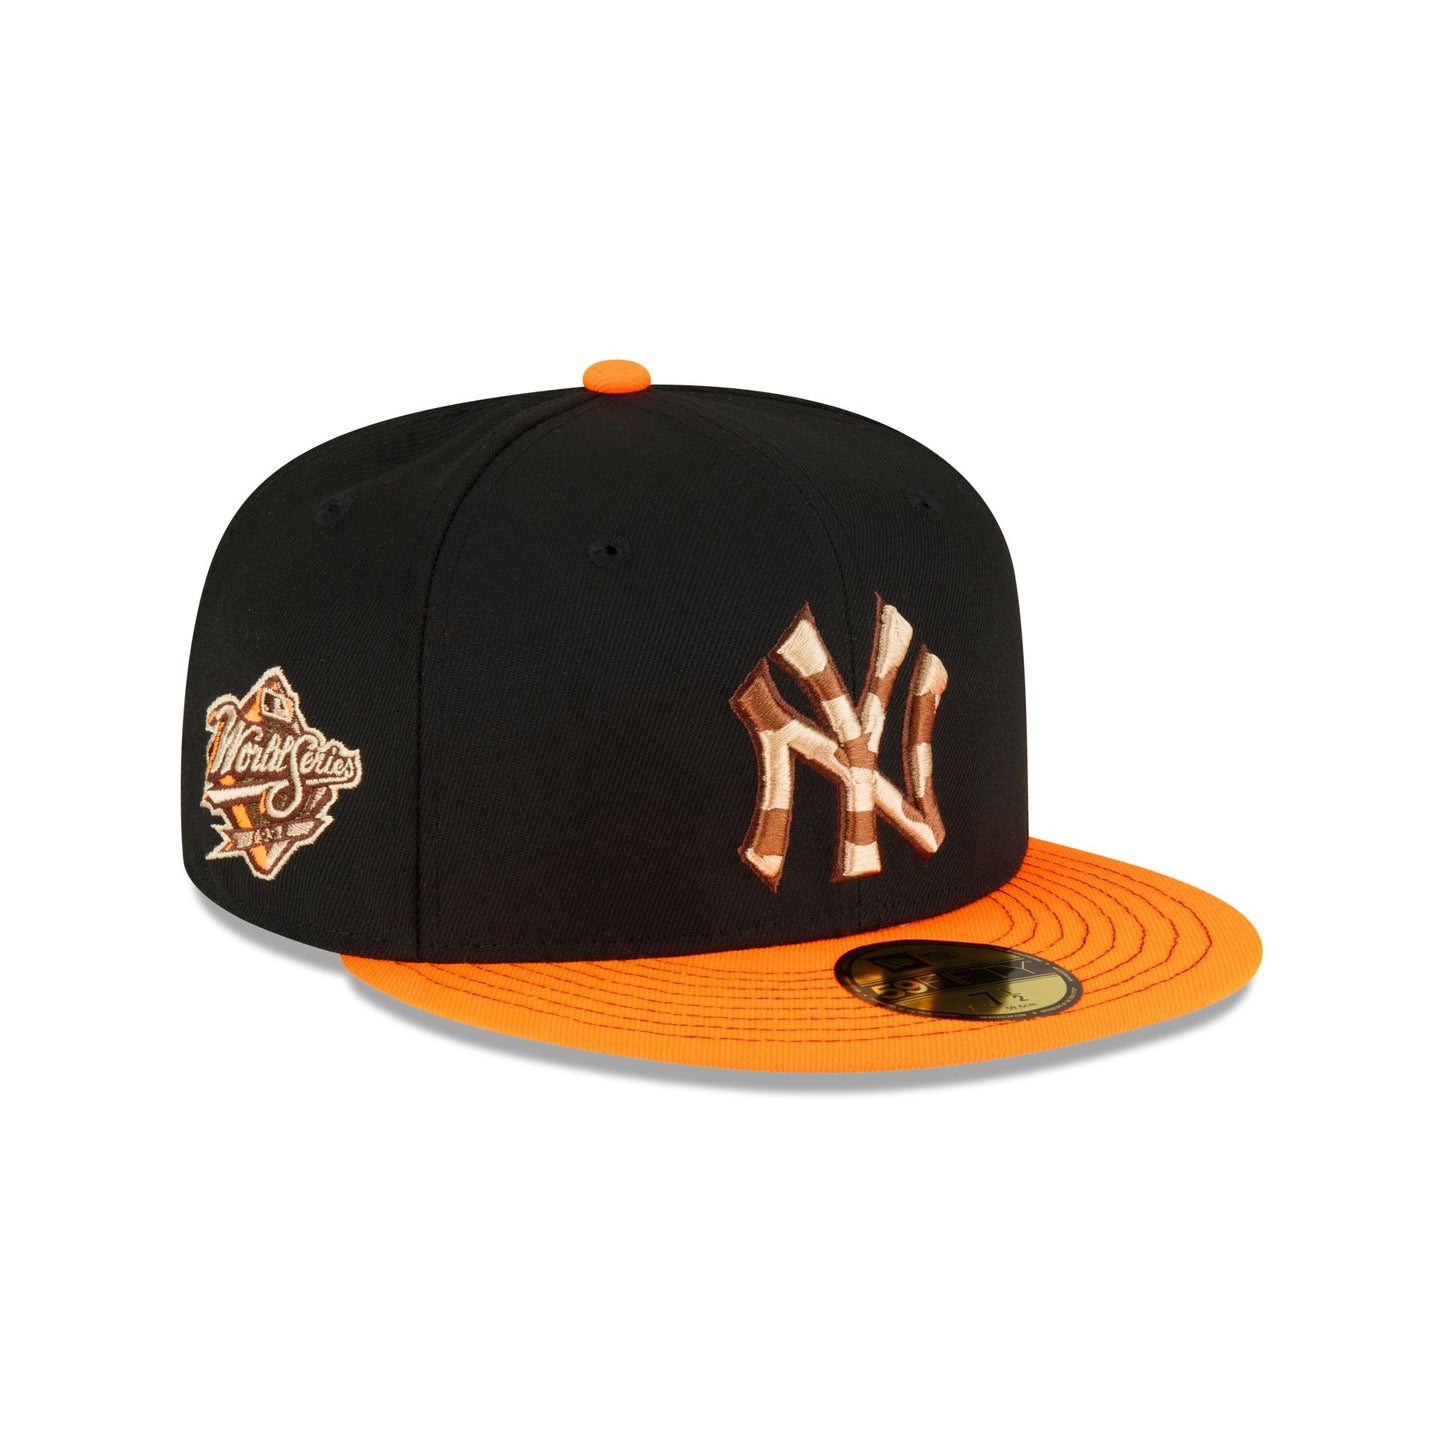 Just Caps Orange – Hat Yankees Cap York 59FIFTY Fitted New Visor New Era